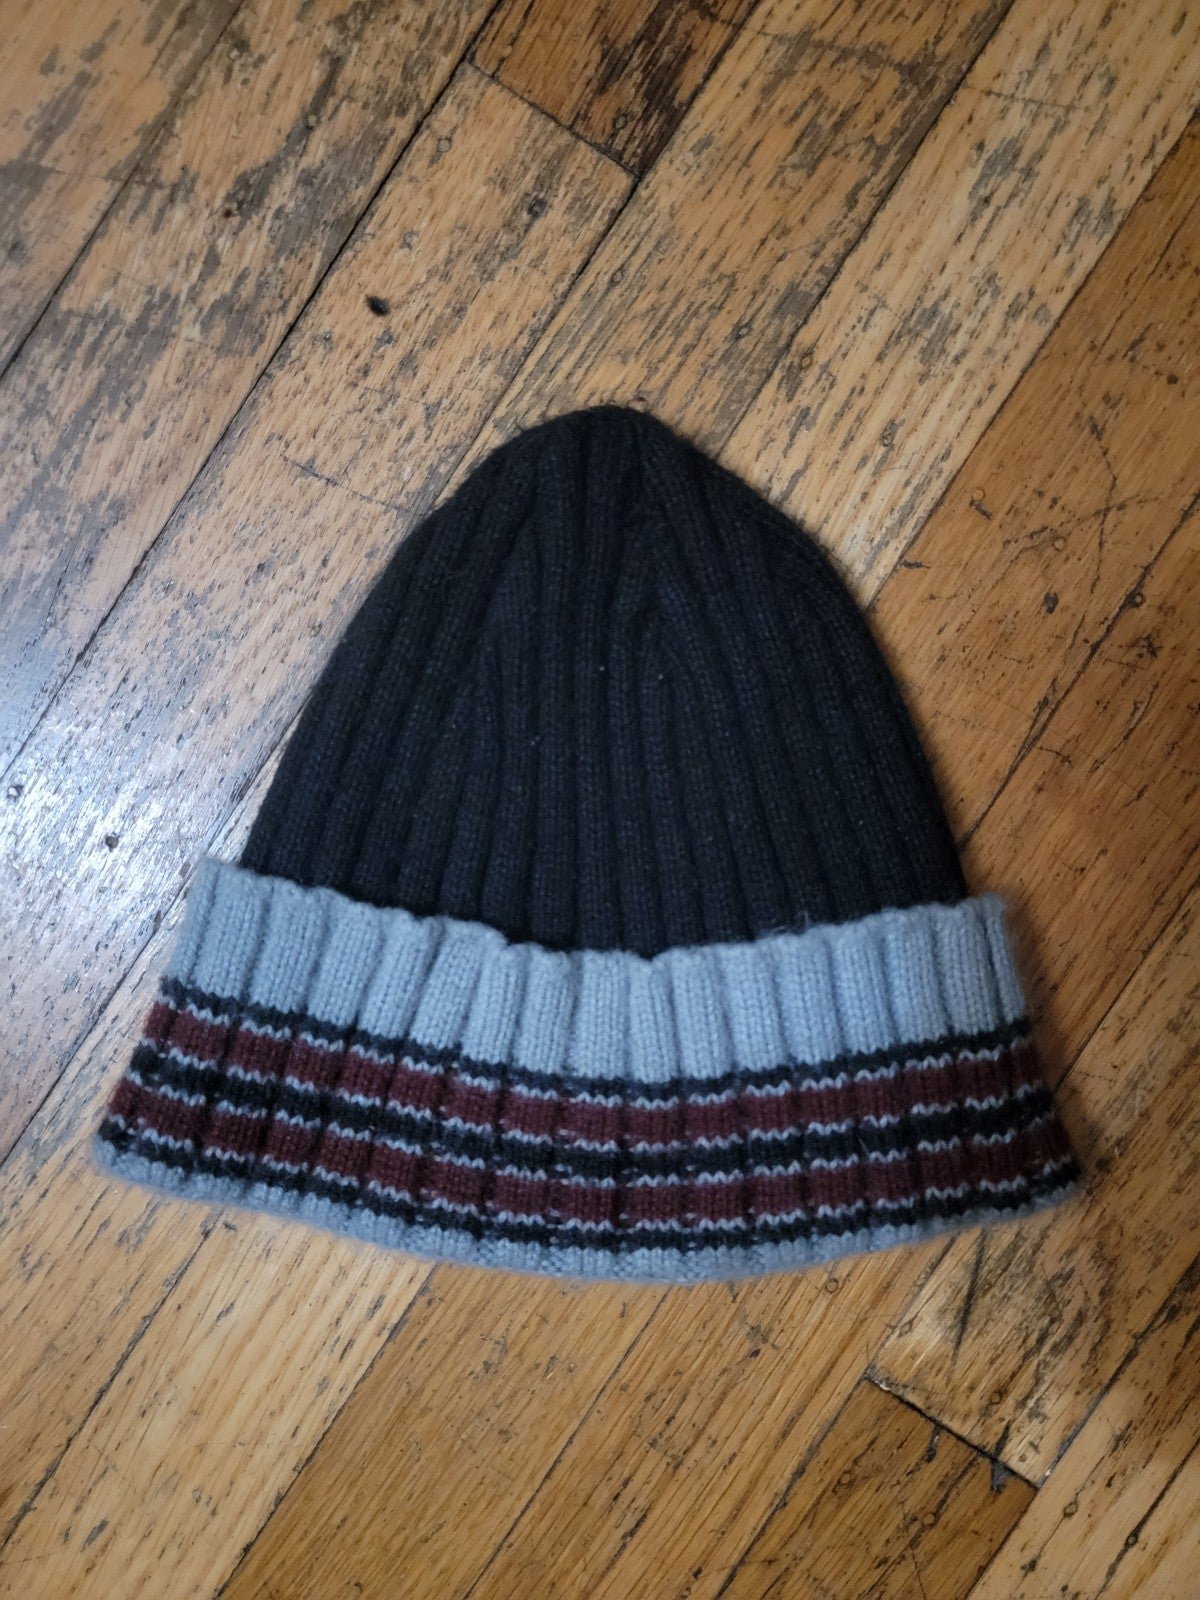 Vintage TIMBERLAND Beanie Cap HAT Warm WINTER Snow Knit BEANIES Hats MENS gDD79DrSO